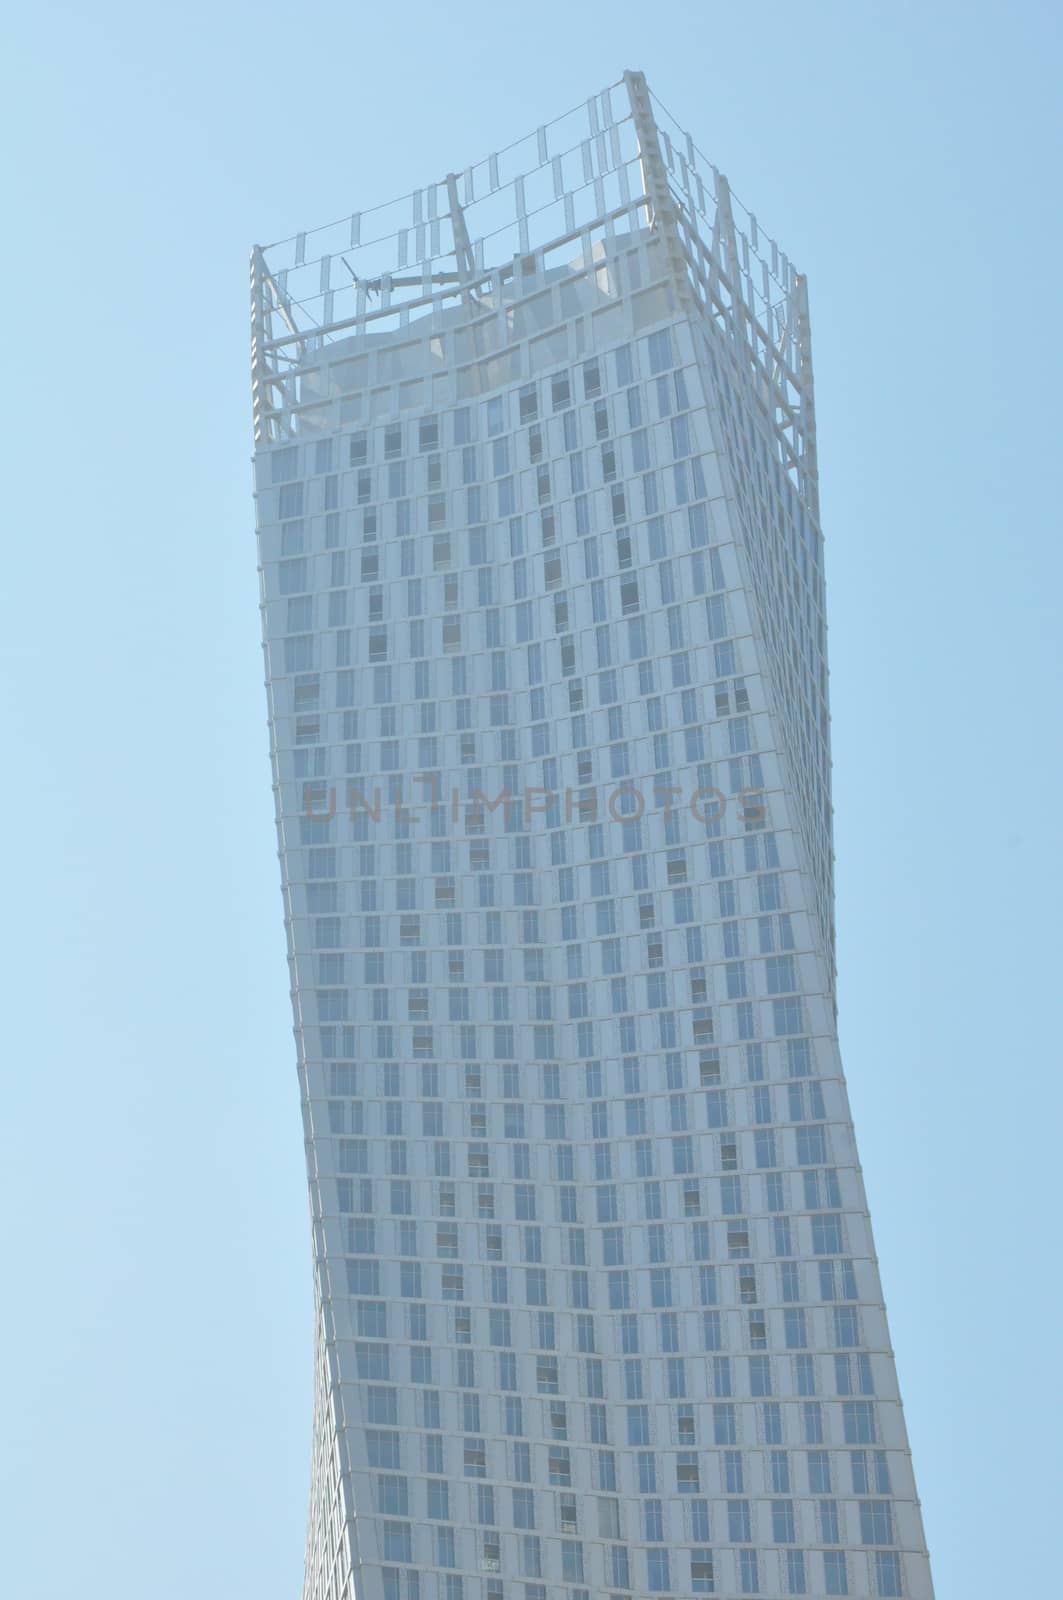 Cayan Tower at Dubai Marina in Dubai, UAE by sainaniritu